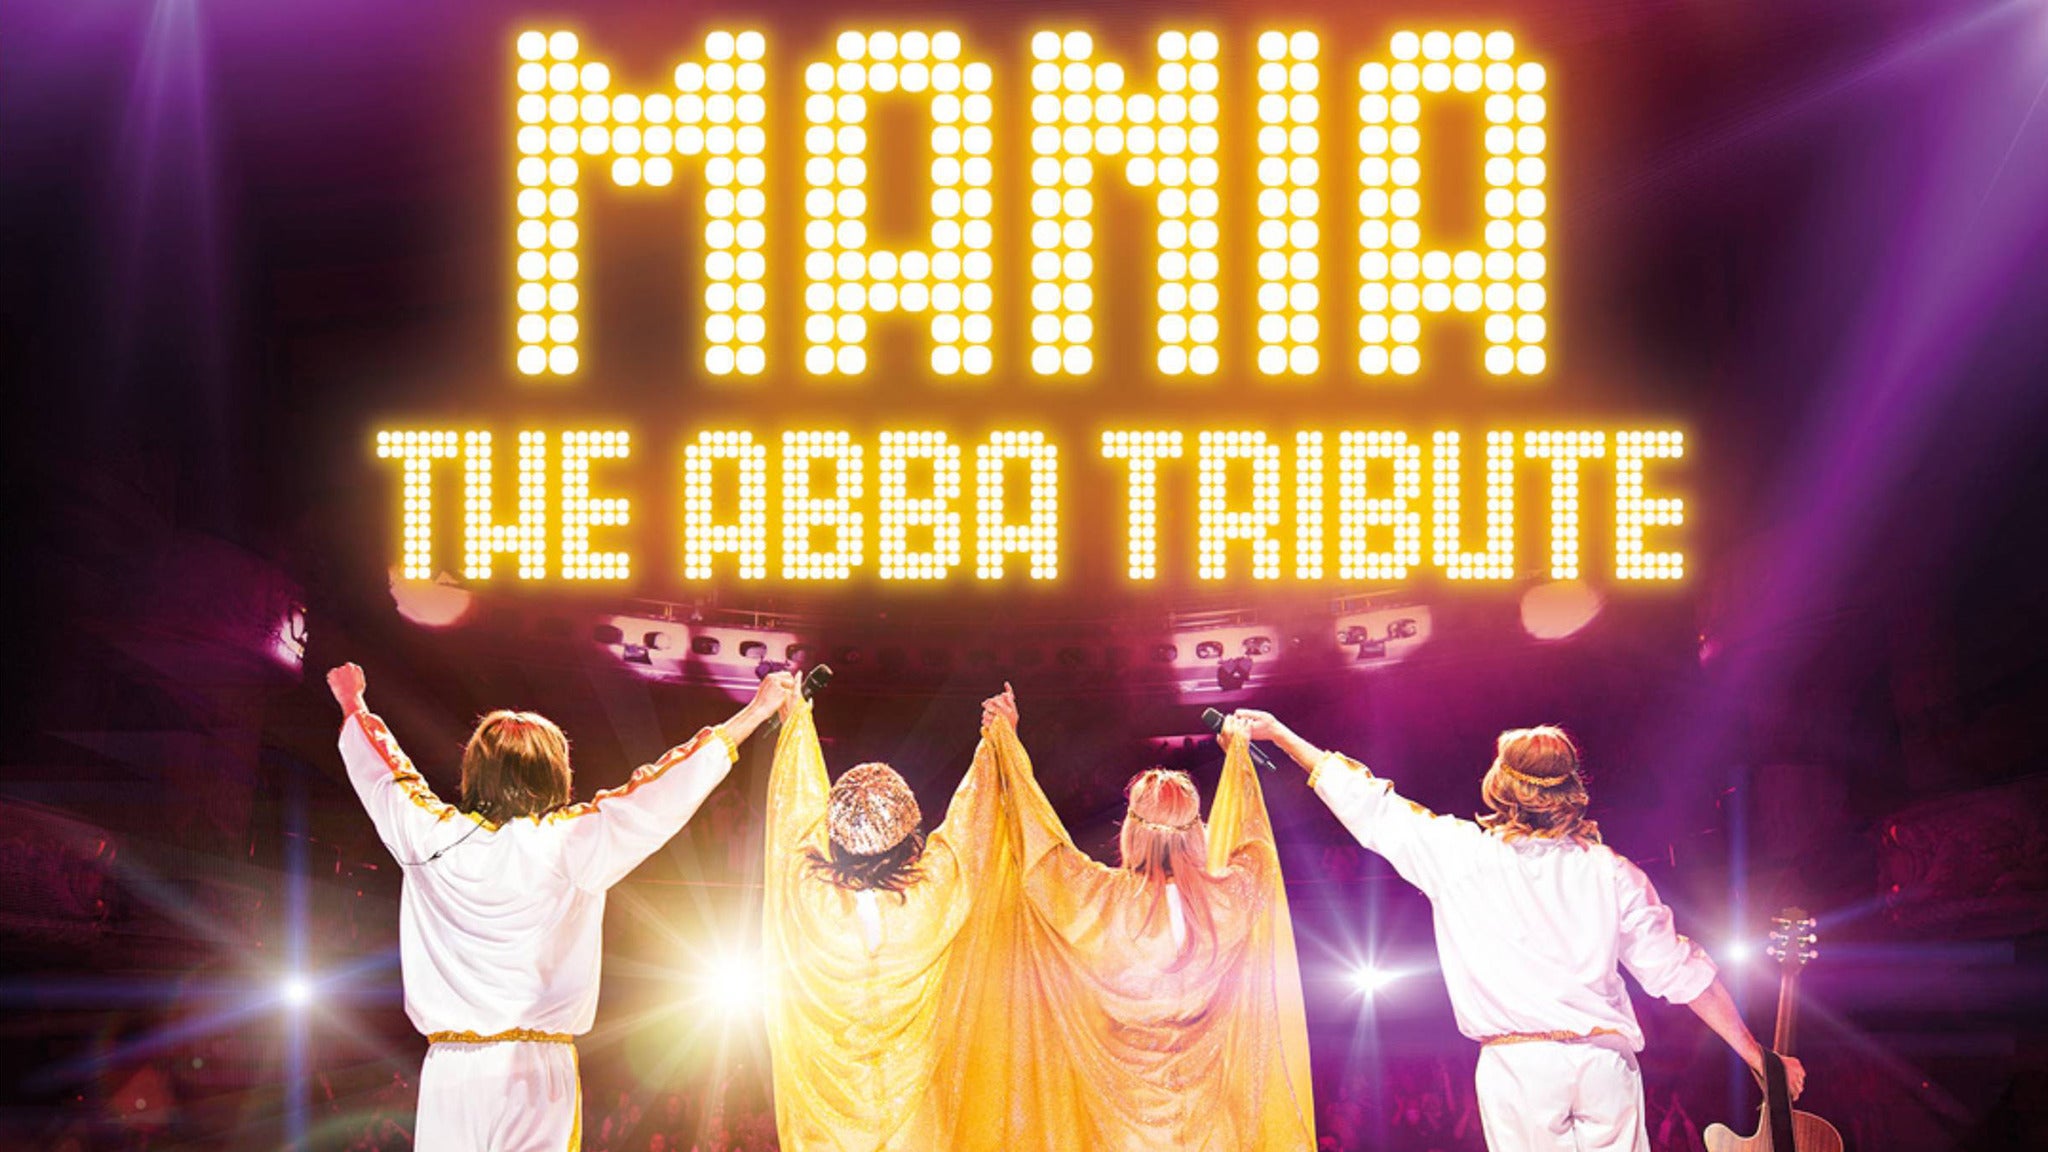 MANIA, The ABBA Tribute at Paramount Theatre - Denver, CO 80202